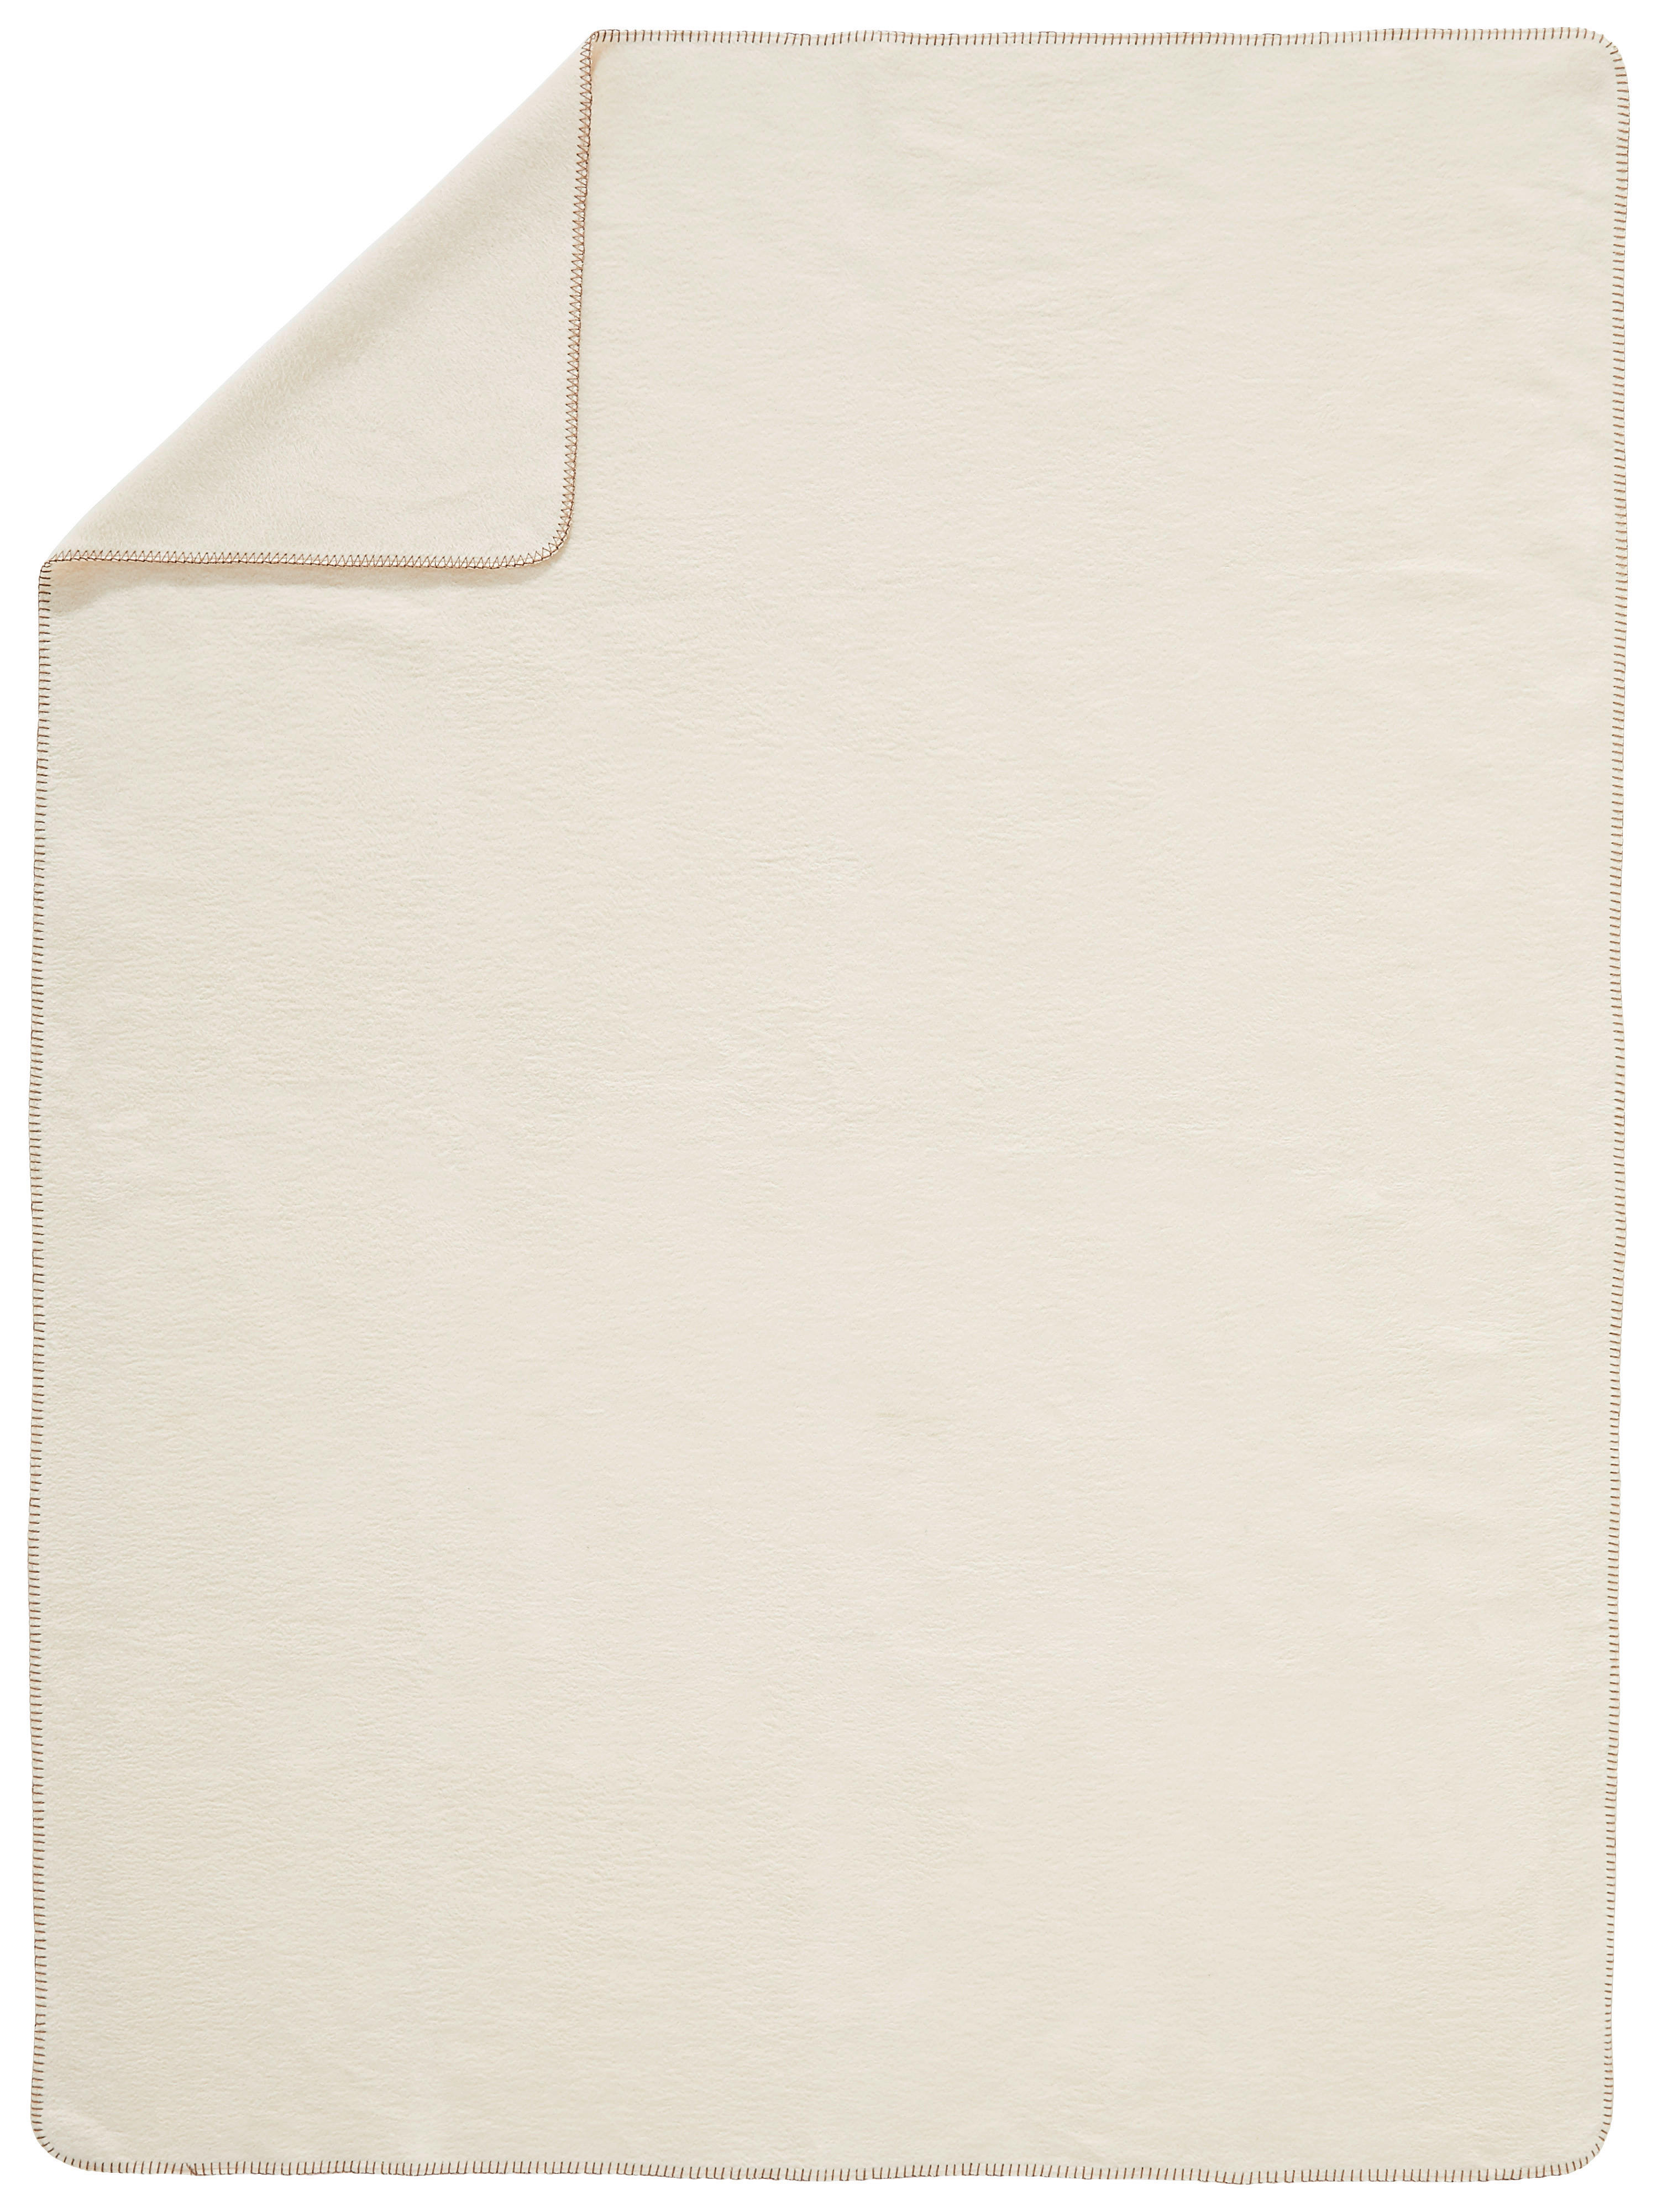 WOHNDECKE 150/200 cm  - Weiß, Basics, Textil (150/200cm) - Bio:Vio